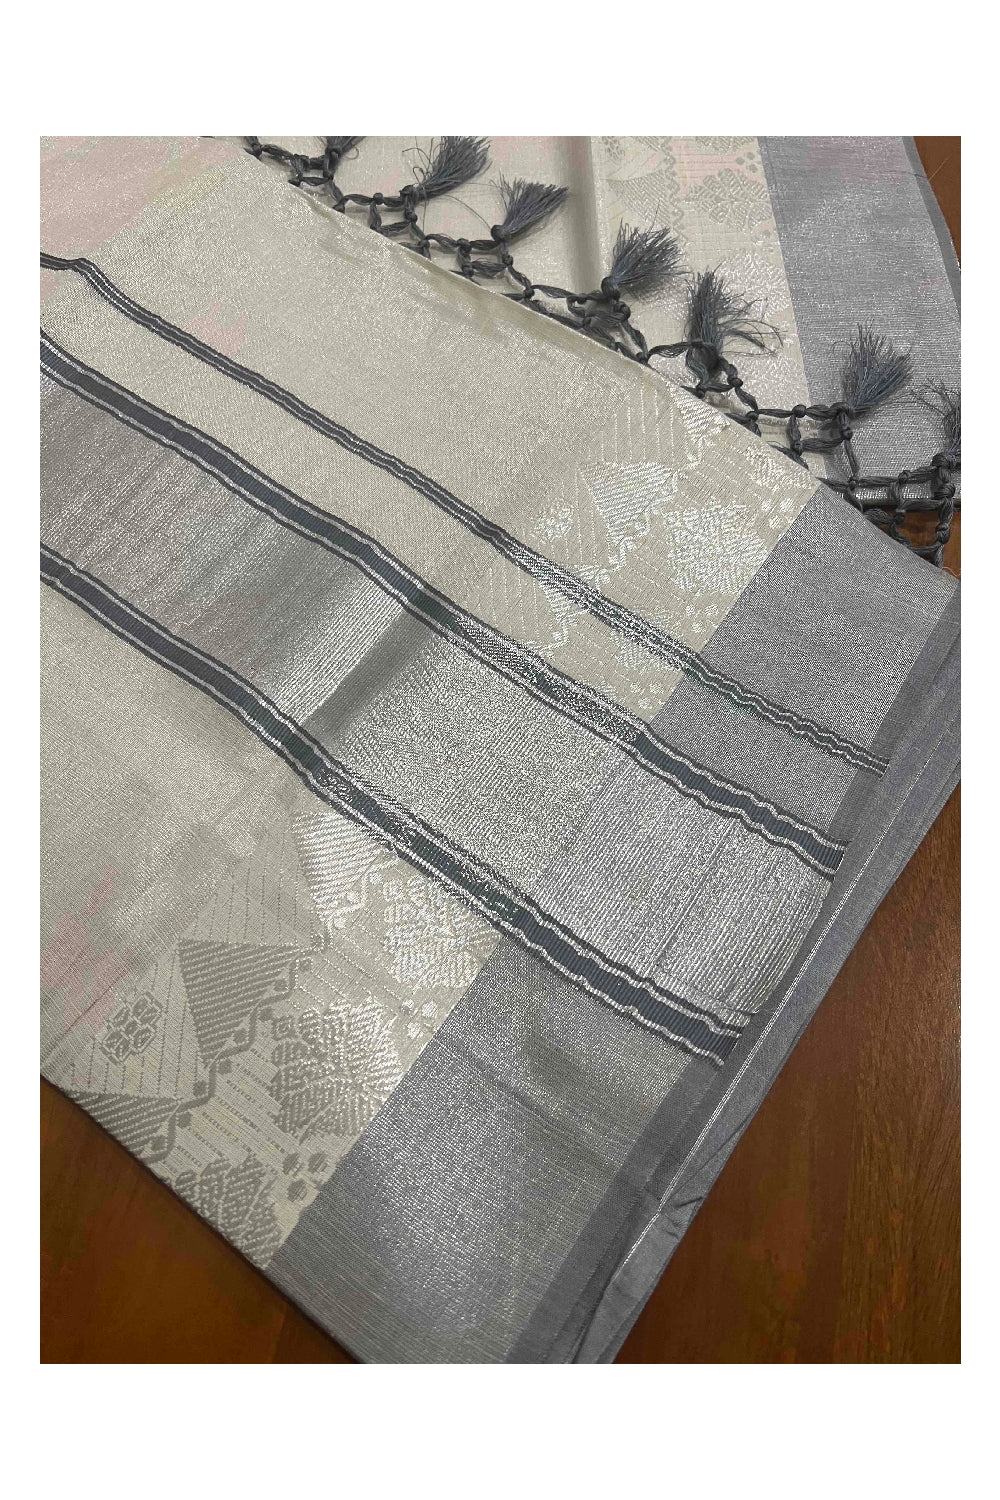 Kerala Silver Tissue Plain Saree with Grey and Silver Border